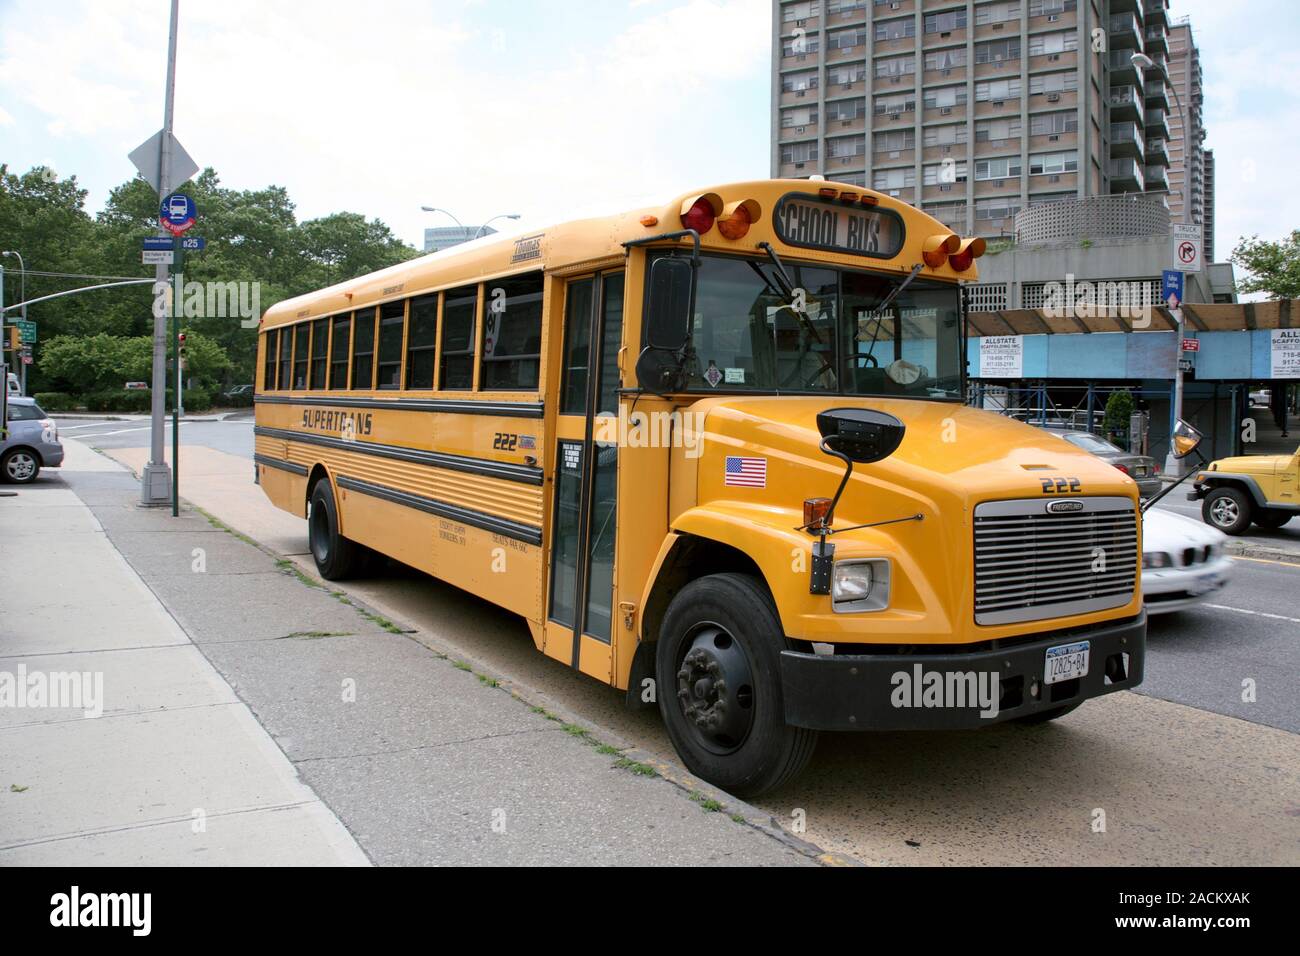 School bus dans la circulation de la ville de New York Banque D'Images